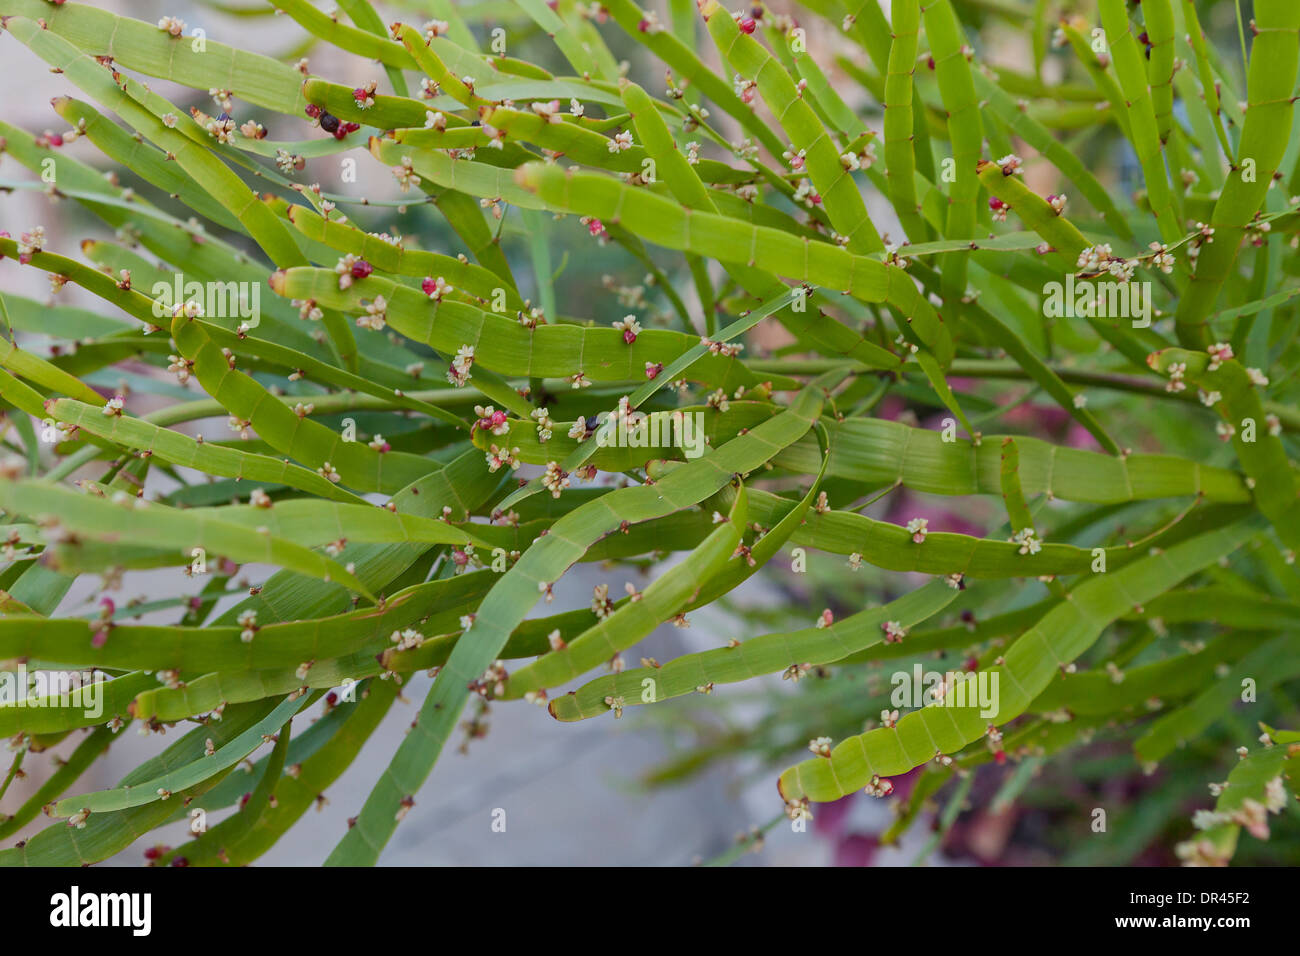 Ribbon bush / Tapeworm plant (Homalocladium platycladum) Stock Photo